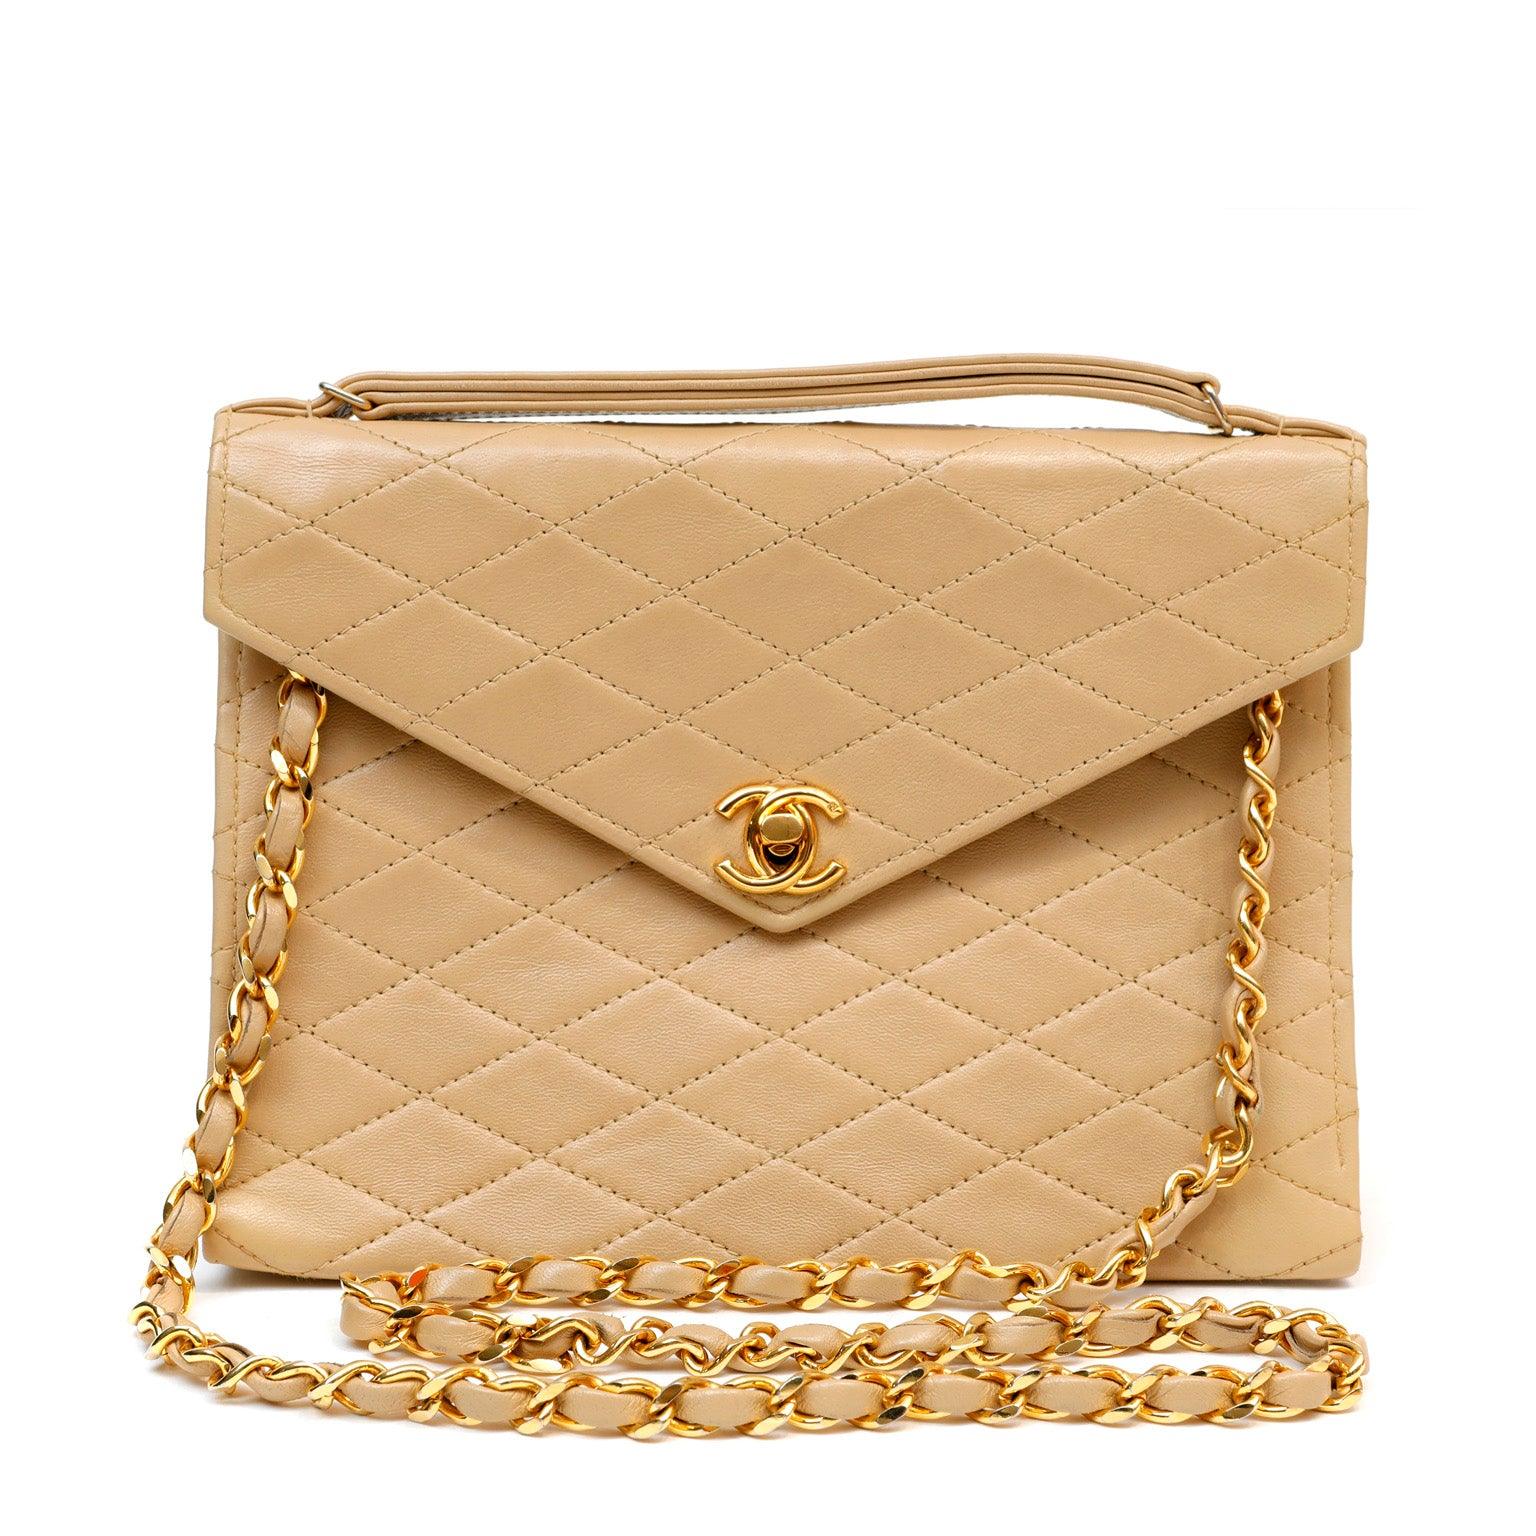 Vintage Chanel Top Handle Bag Review